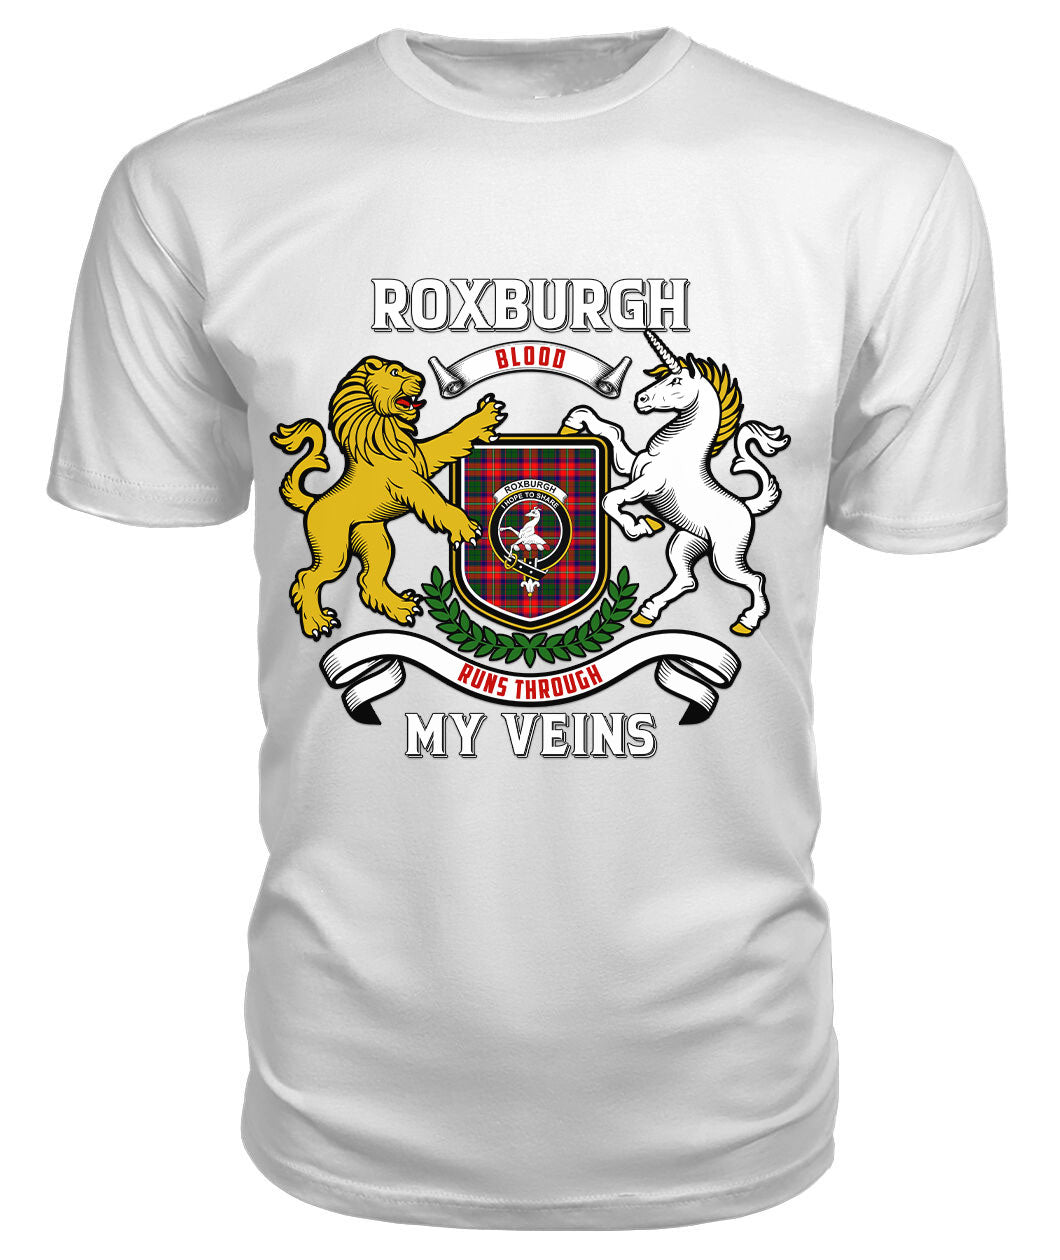 Roxburgh District Tartan Crest 2D T-shirt - Blood Runs Through My Veins Style